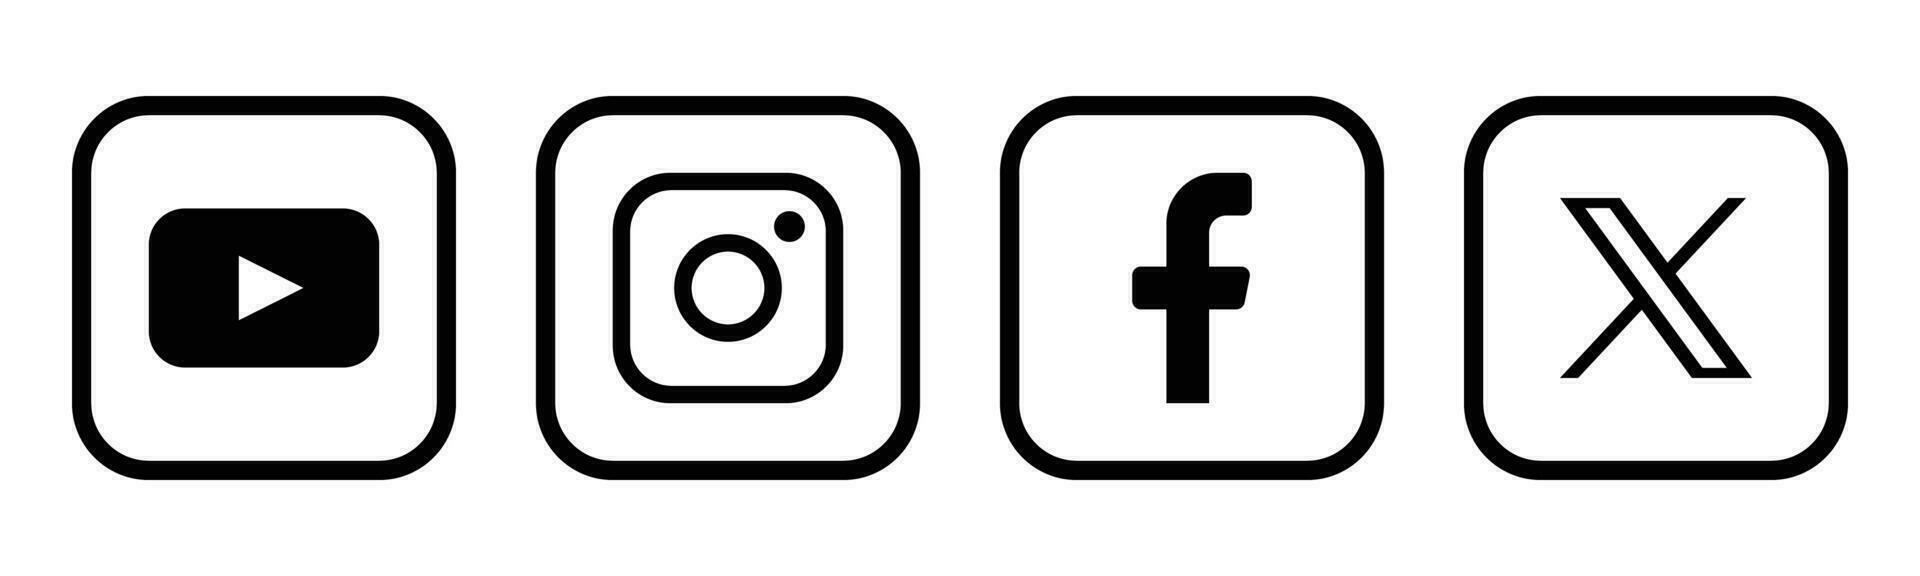 sociaal media merken logo reeks - youtube, facebook, instagram, twitter pictogrammen vector